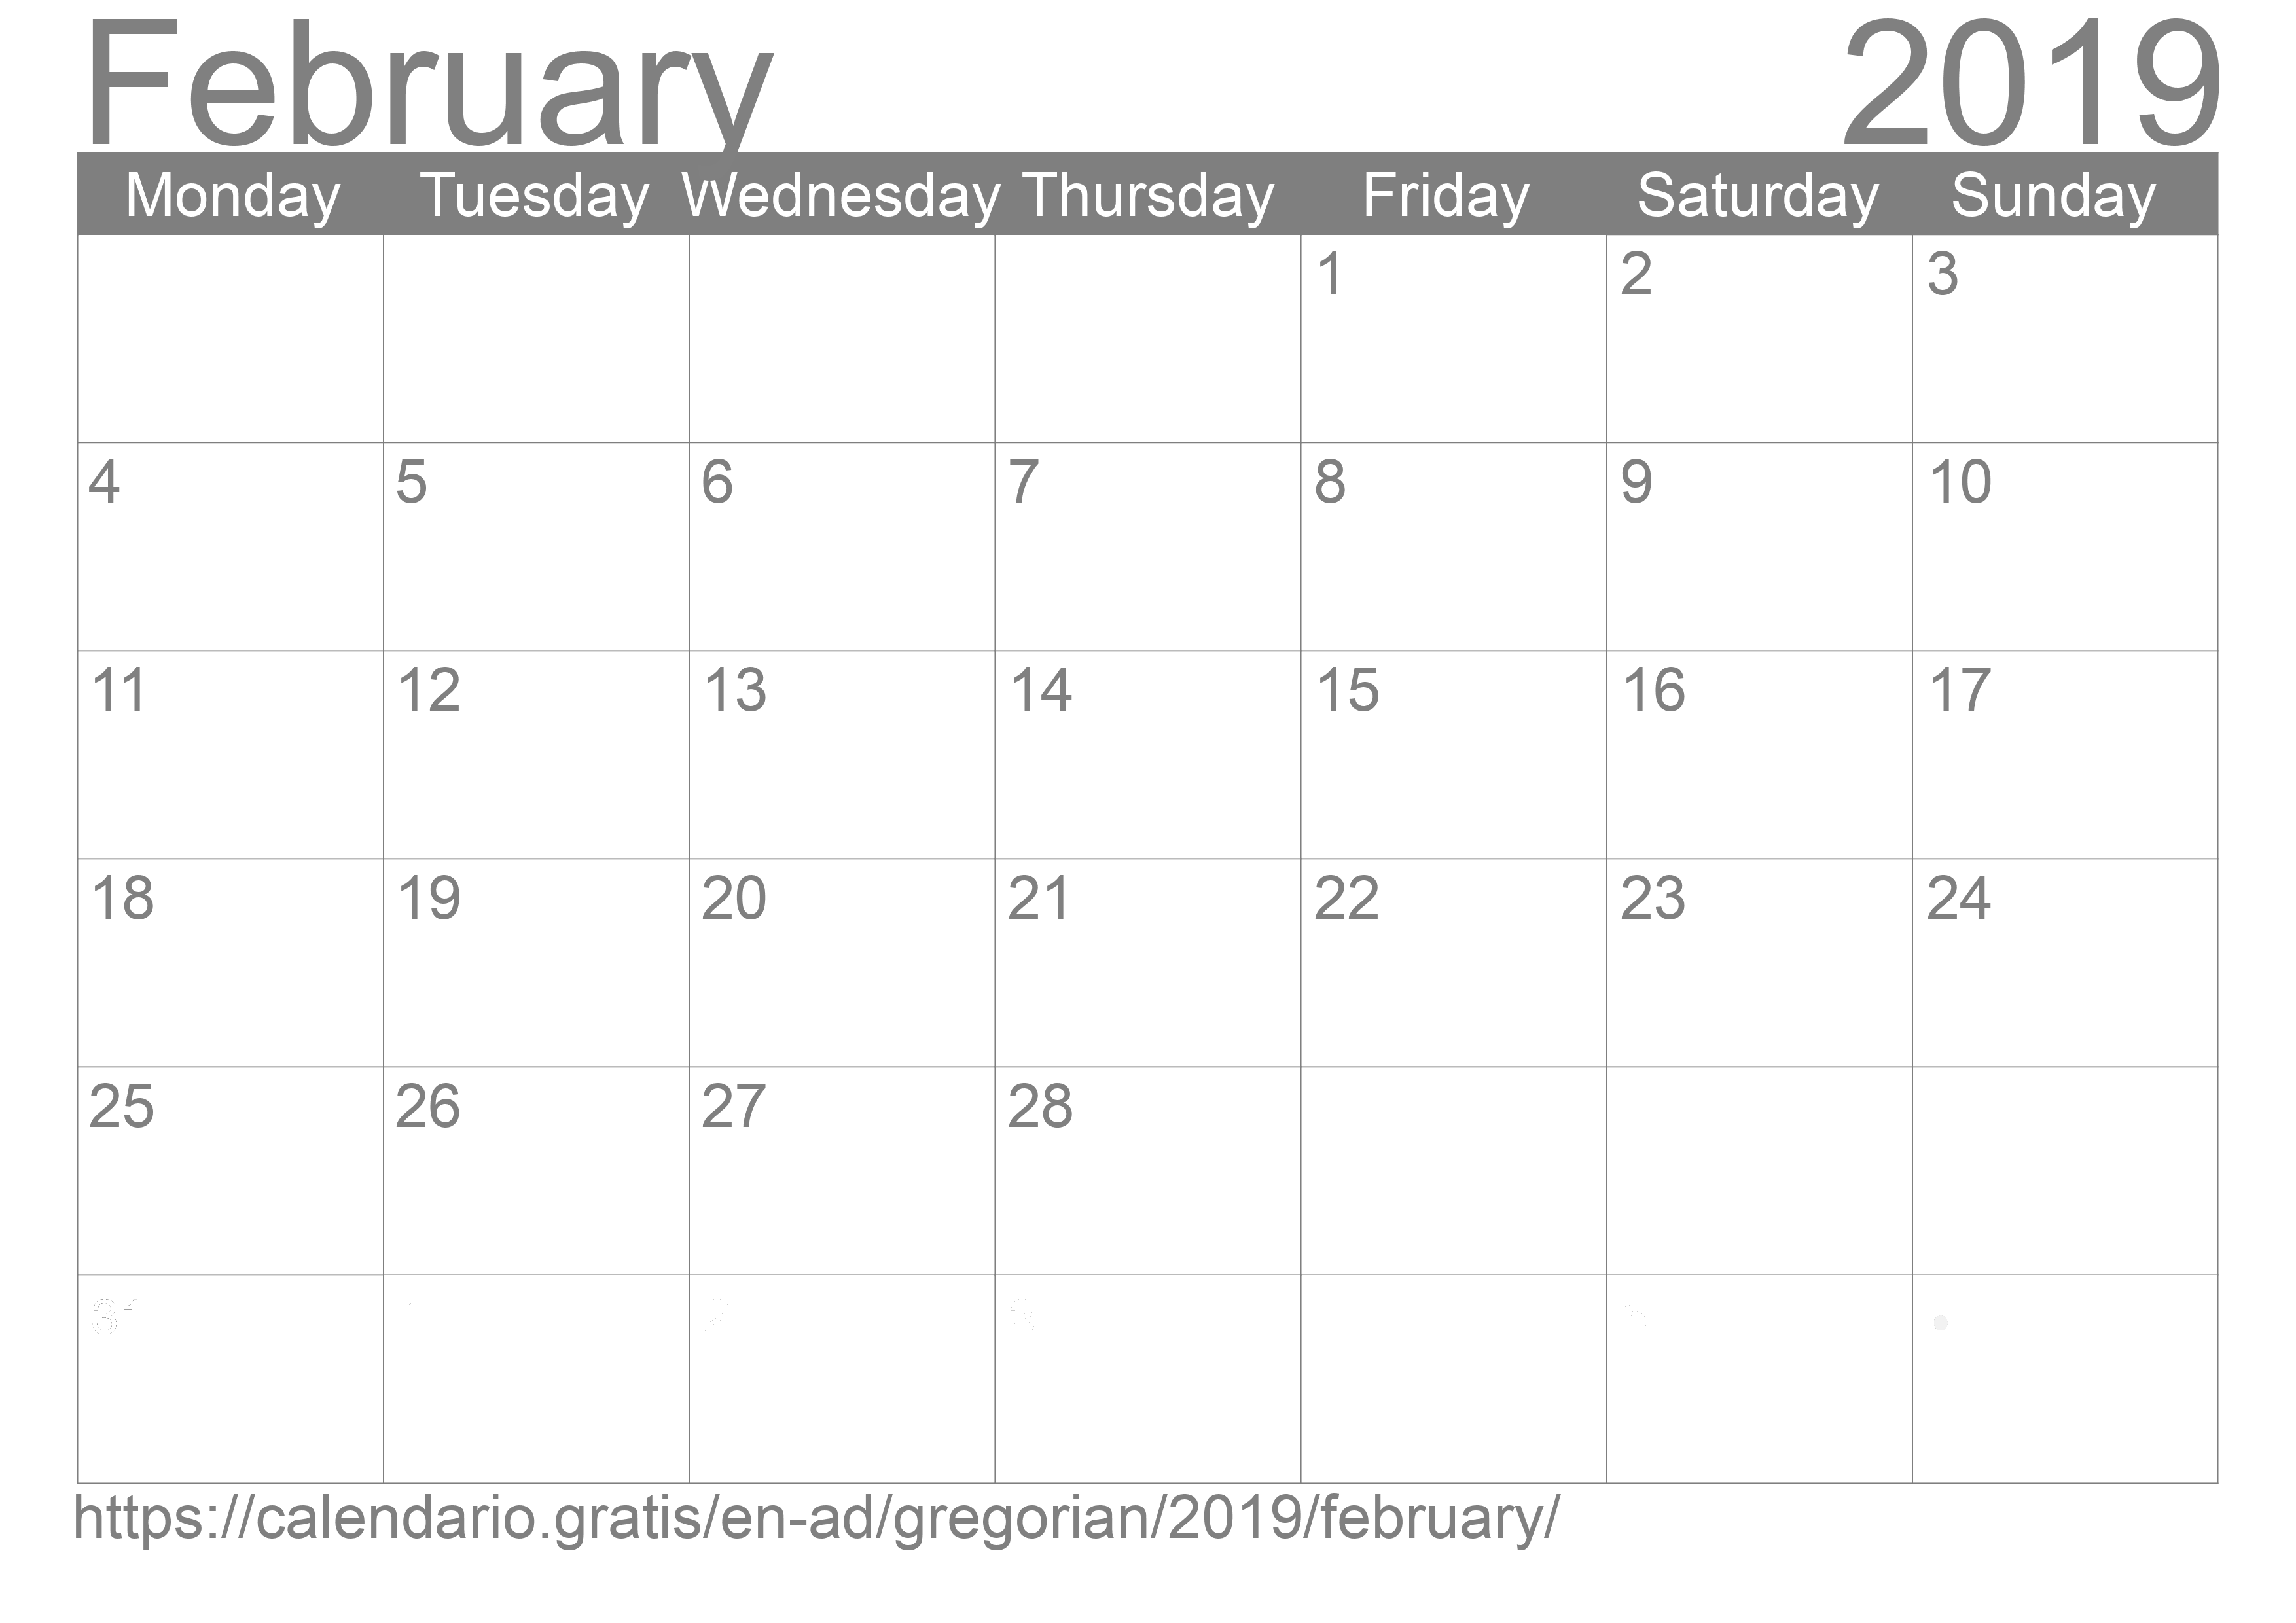 Calendar February 2019 to print